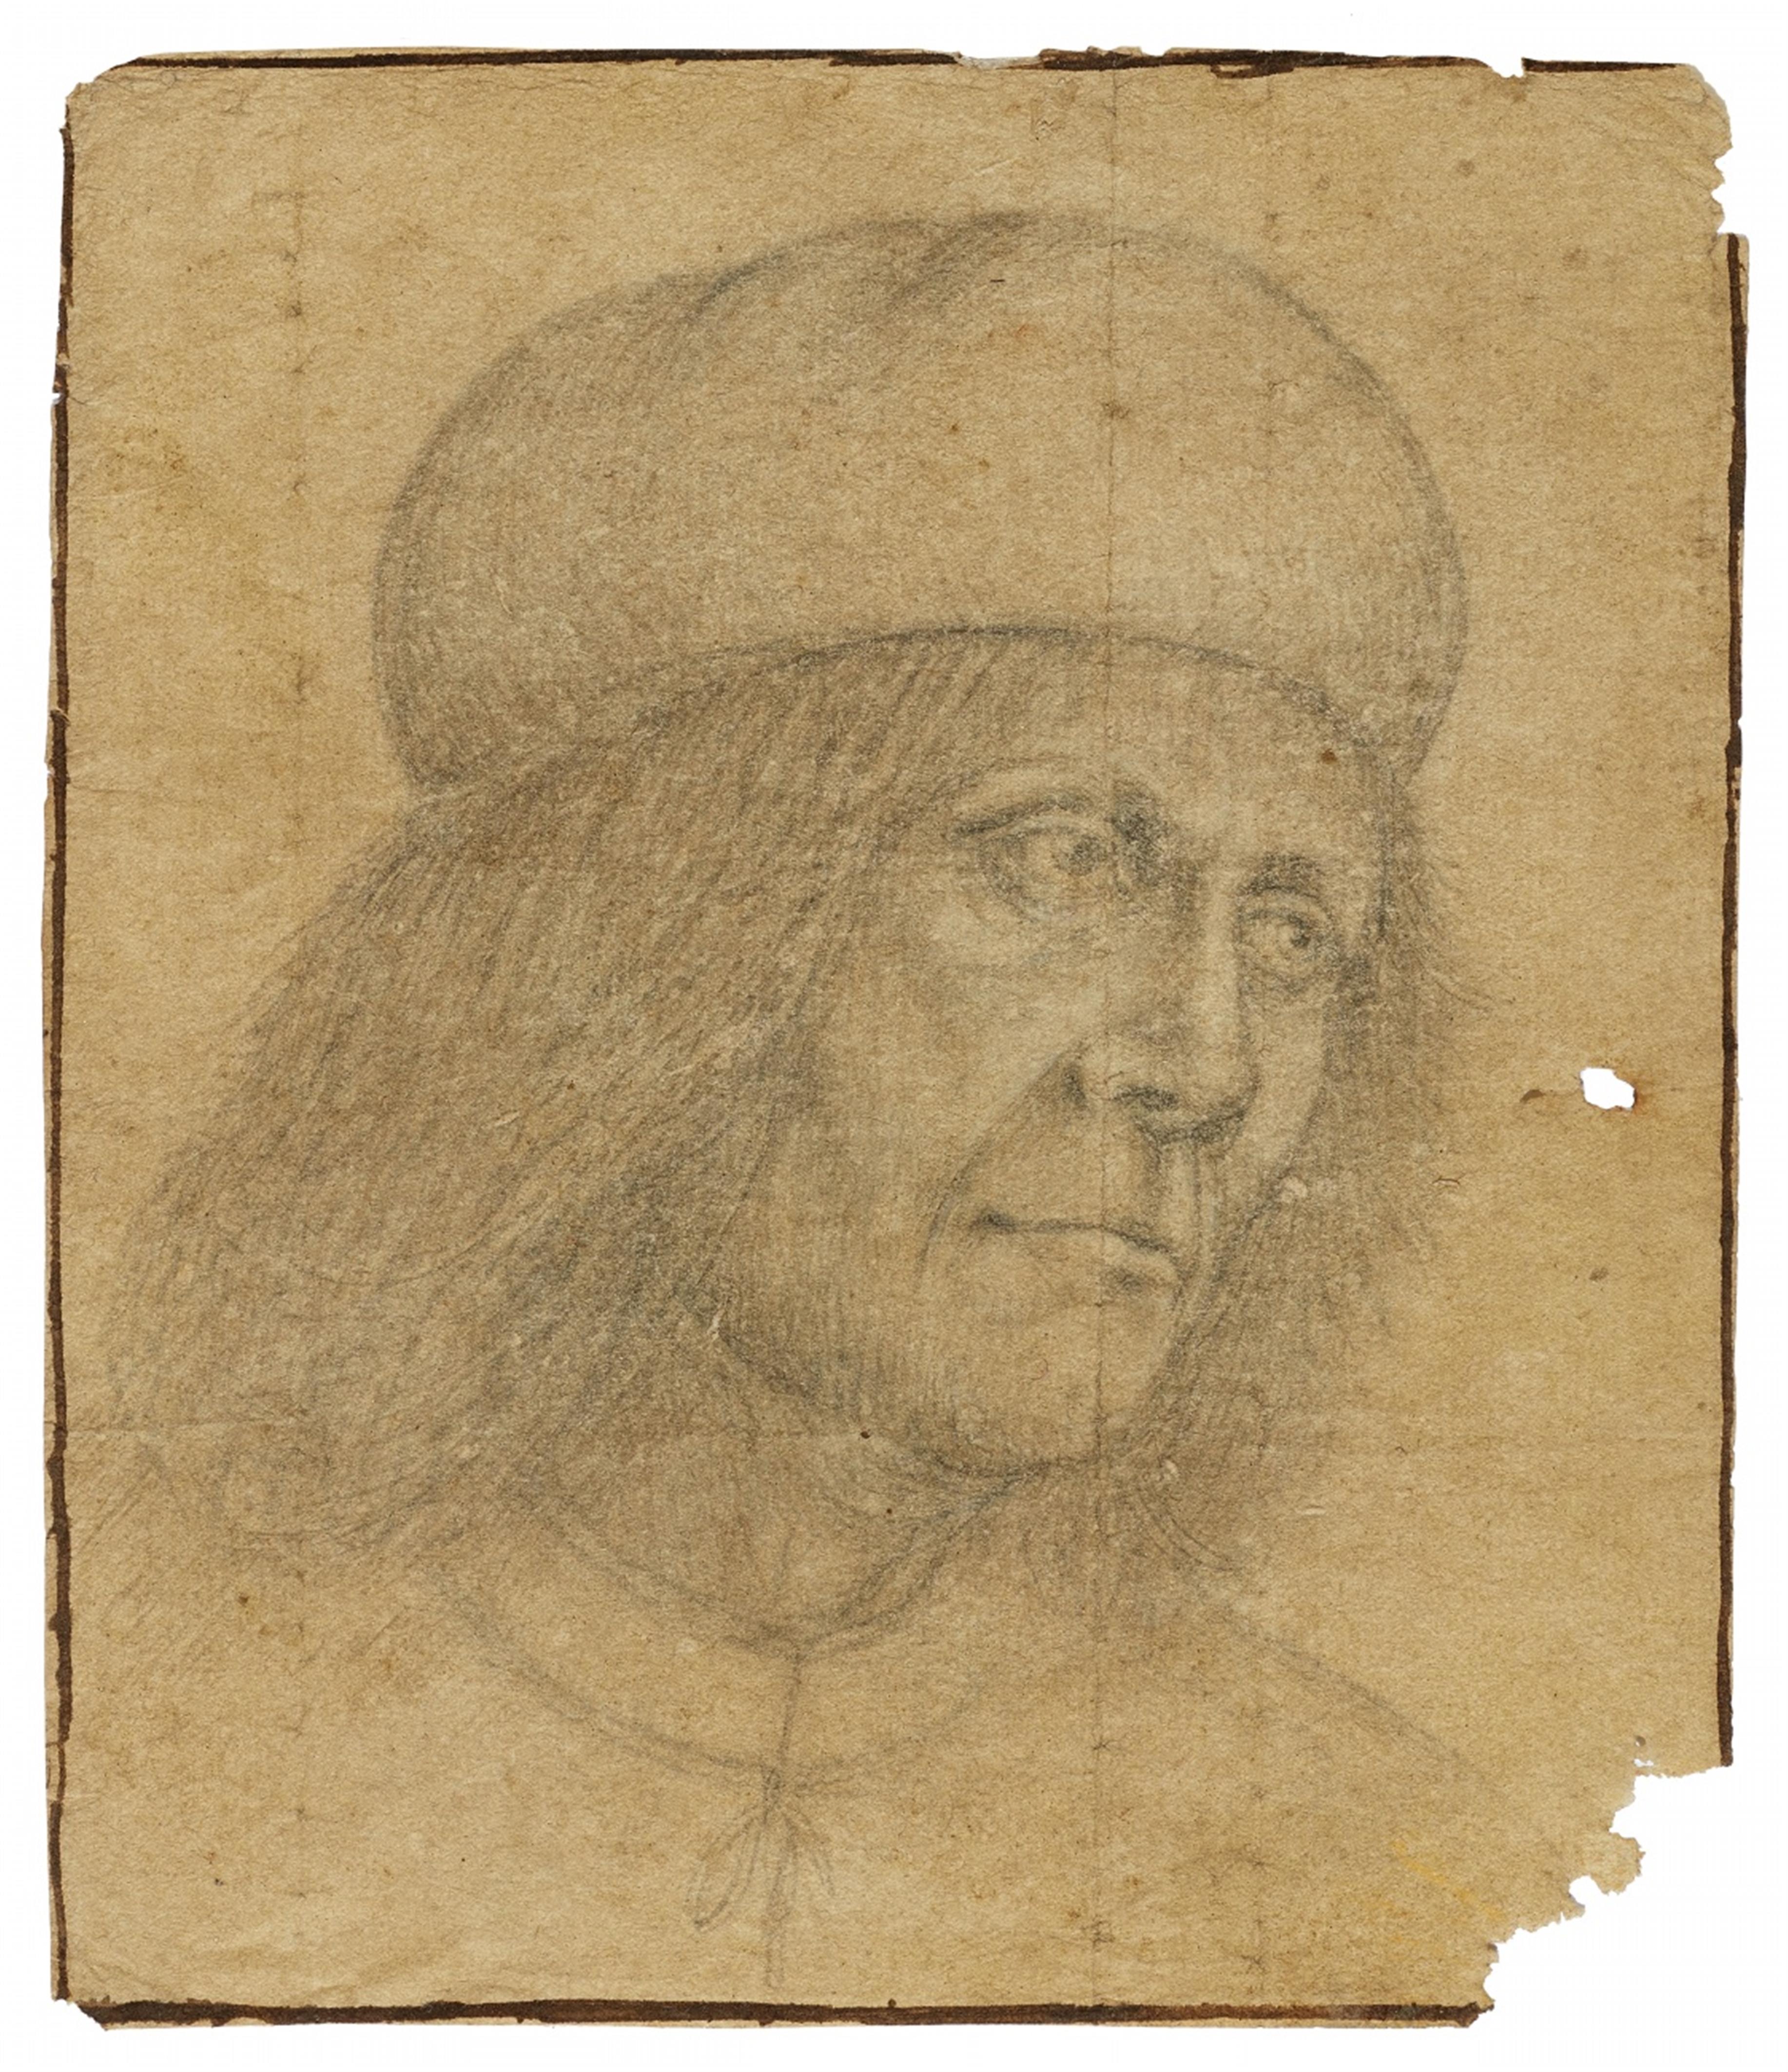 Venetian School 16th century - Portrait of a Man in a Beret Giovanni Bellini?)